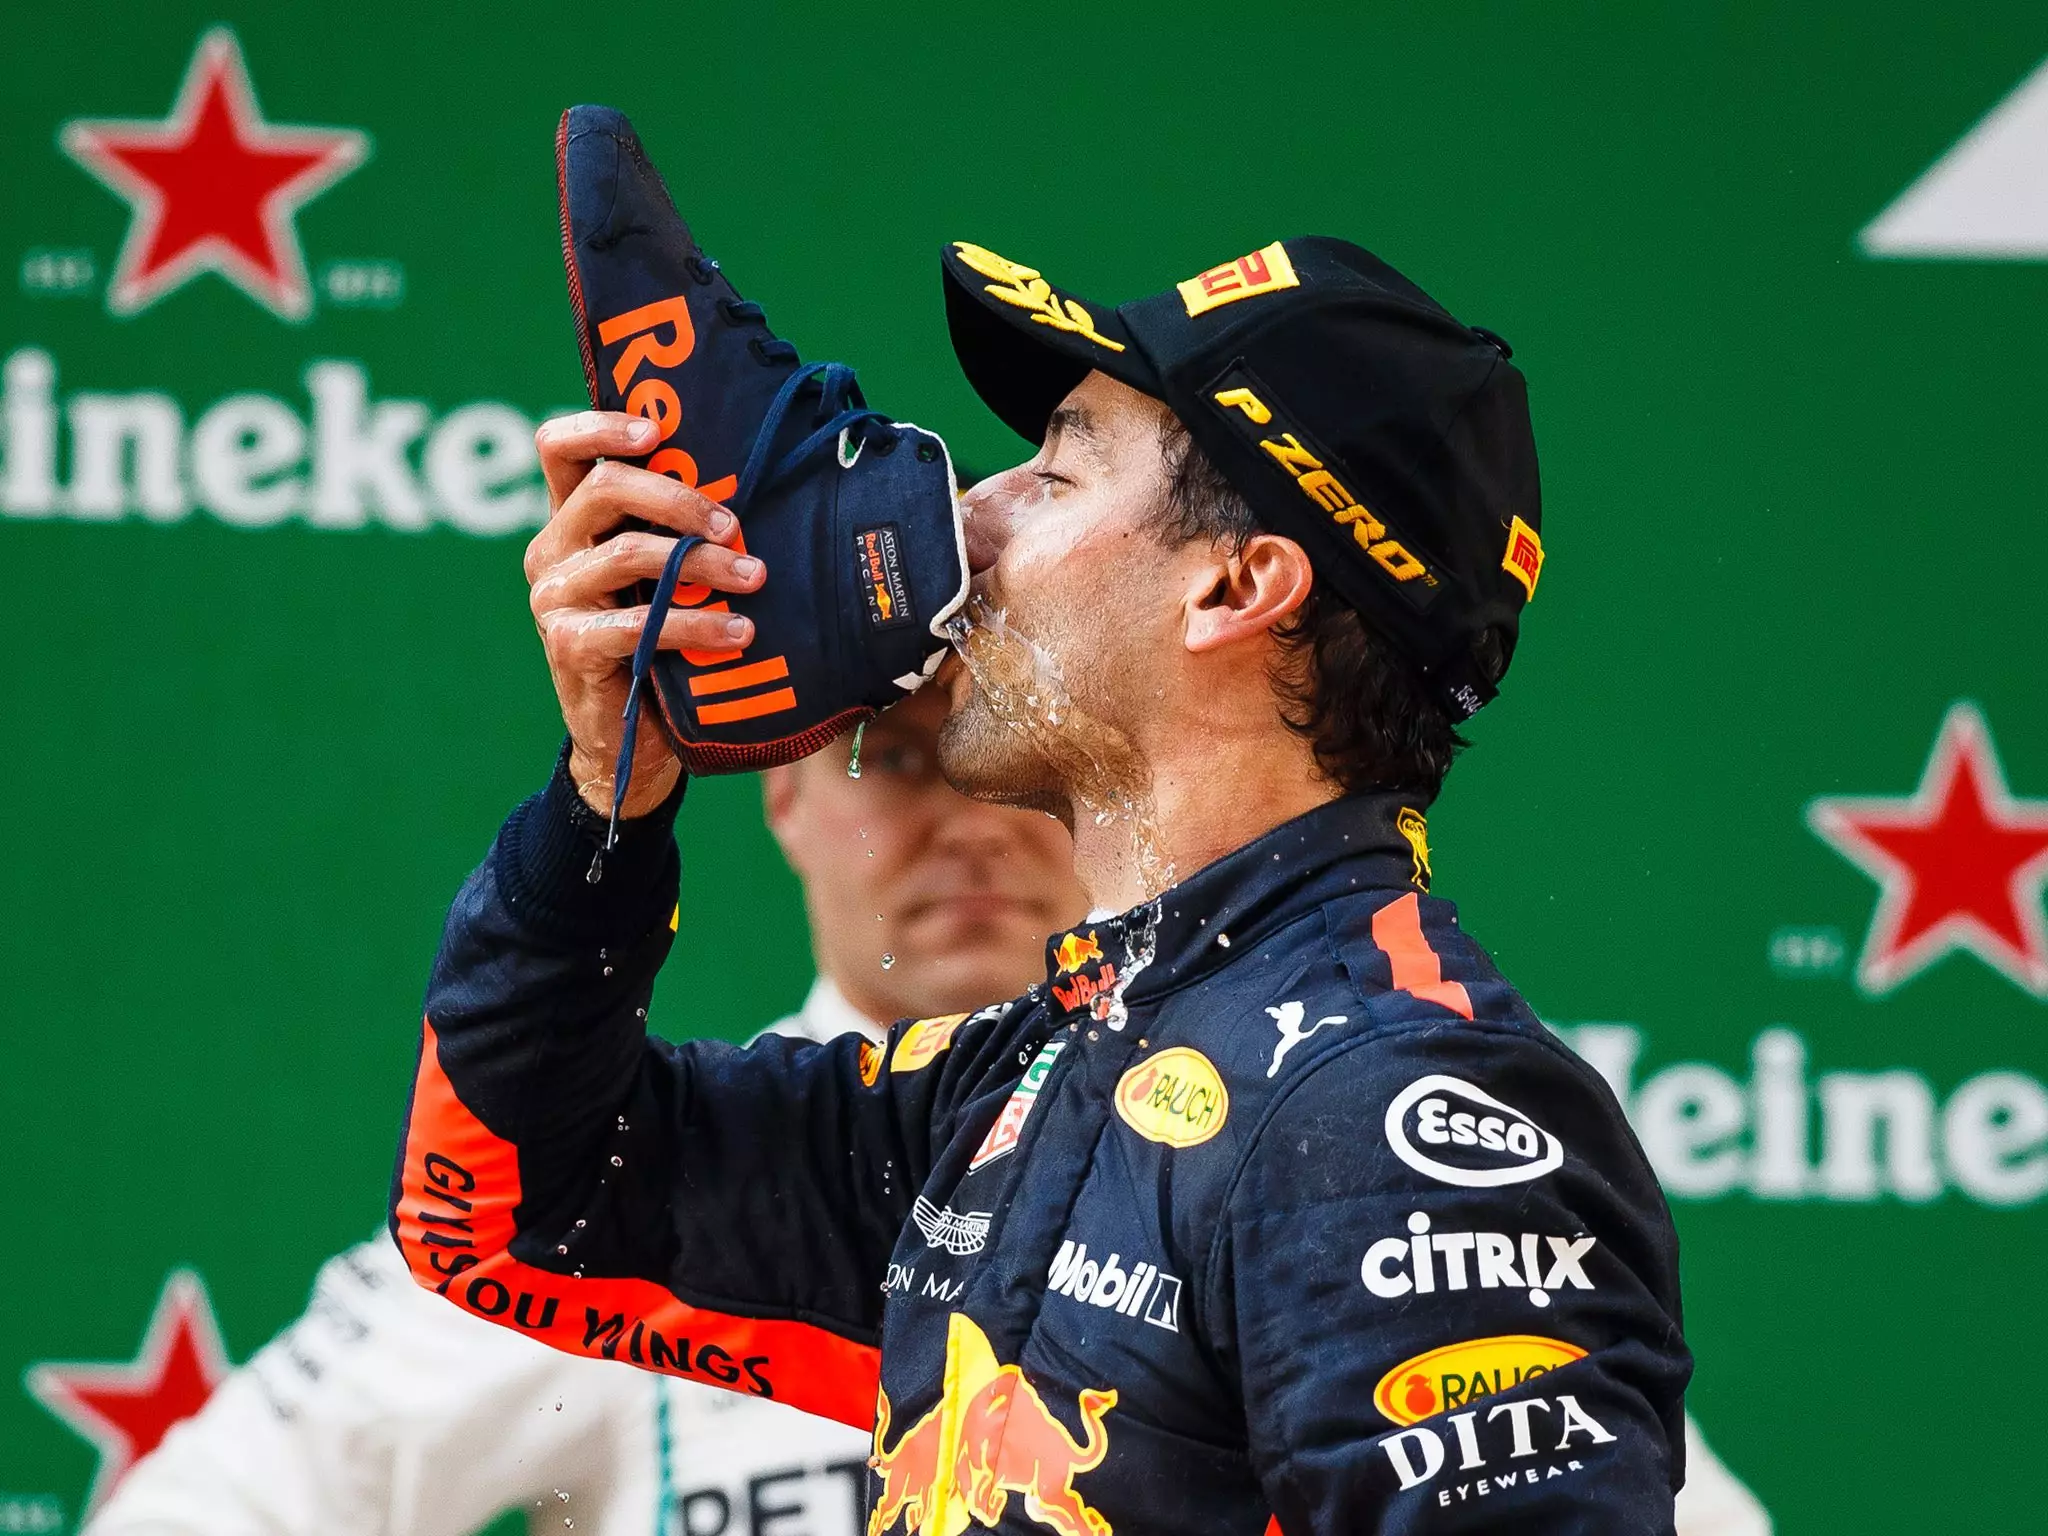 Ricciardo celebrates a win with a classic shoey.